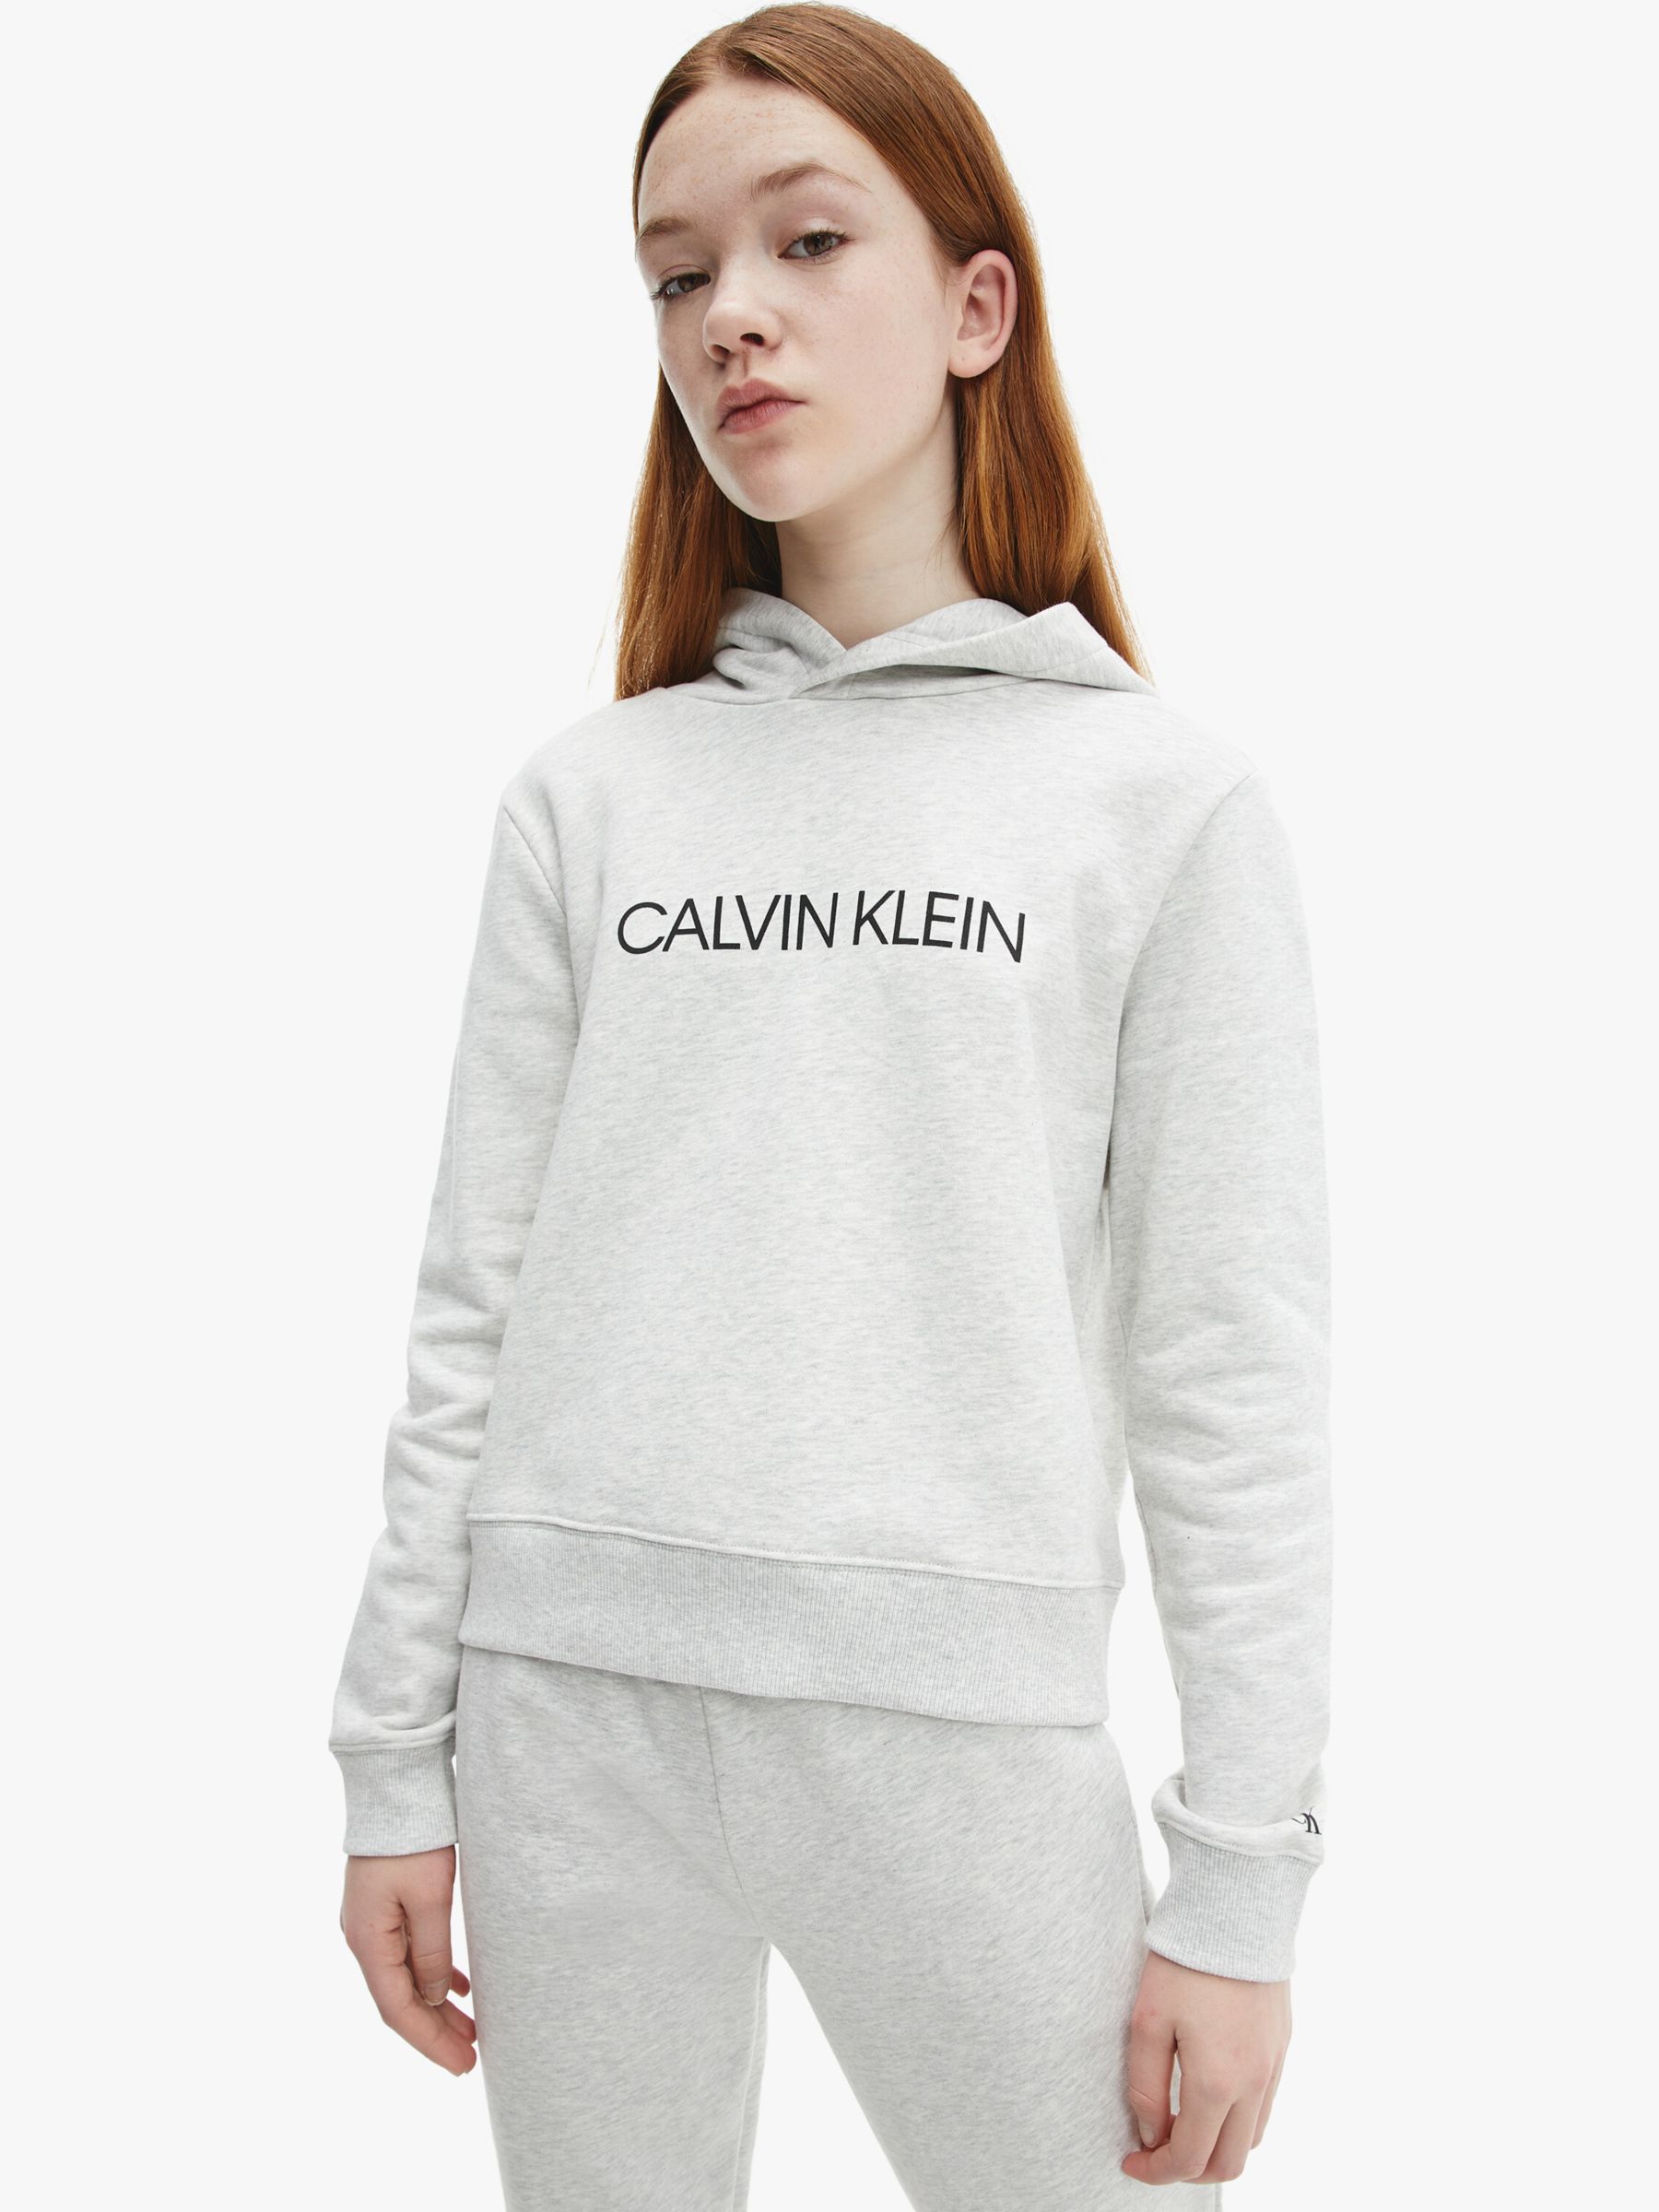 Calvin Klein Kids' Organic Cotton Logo Tracksuit Set, White Heather